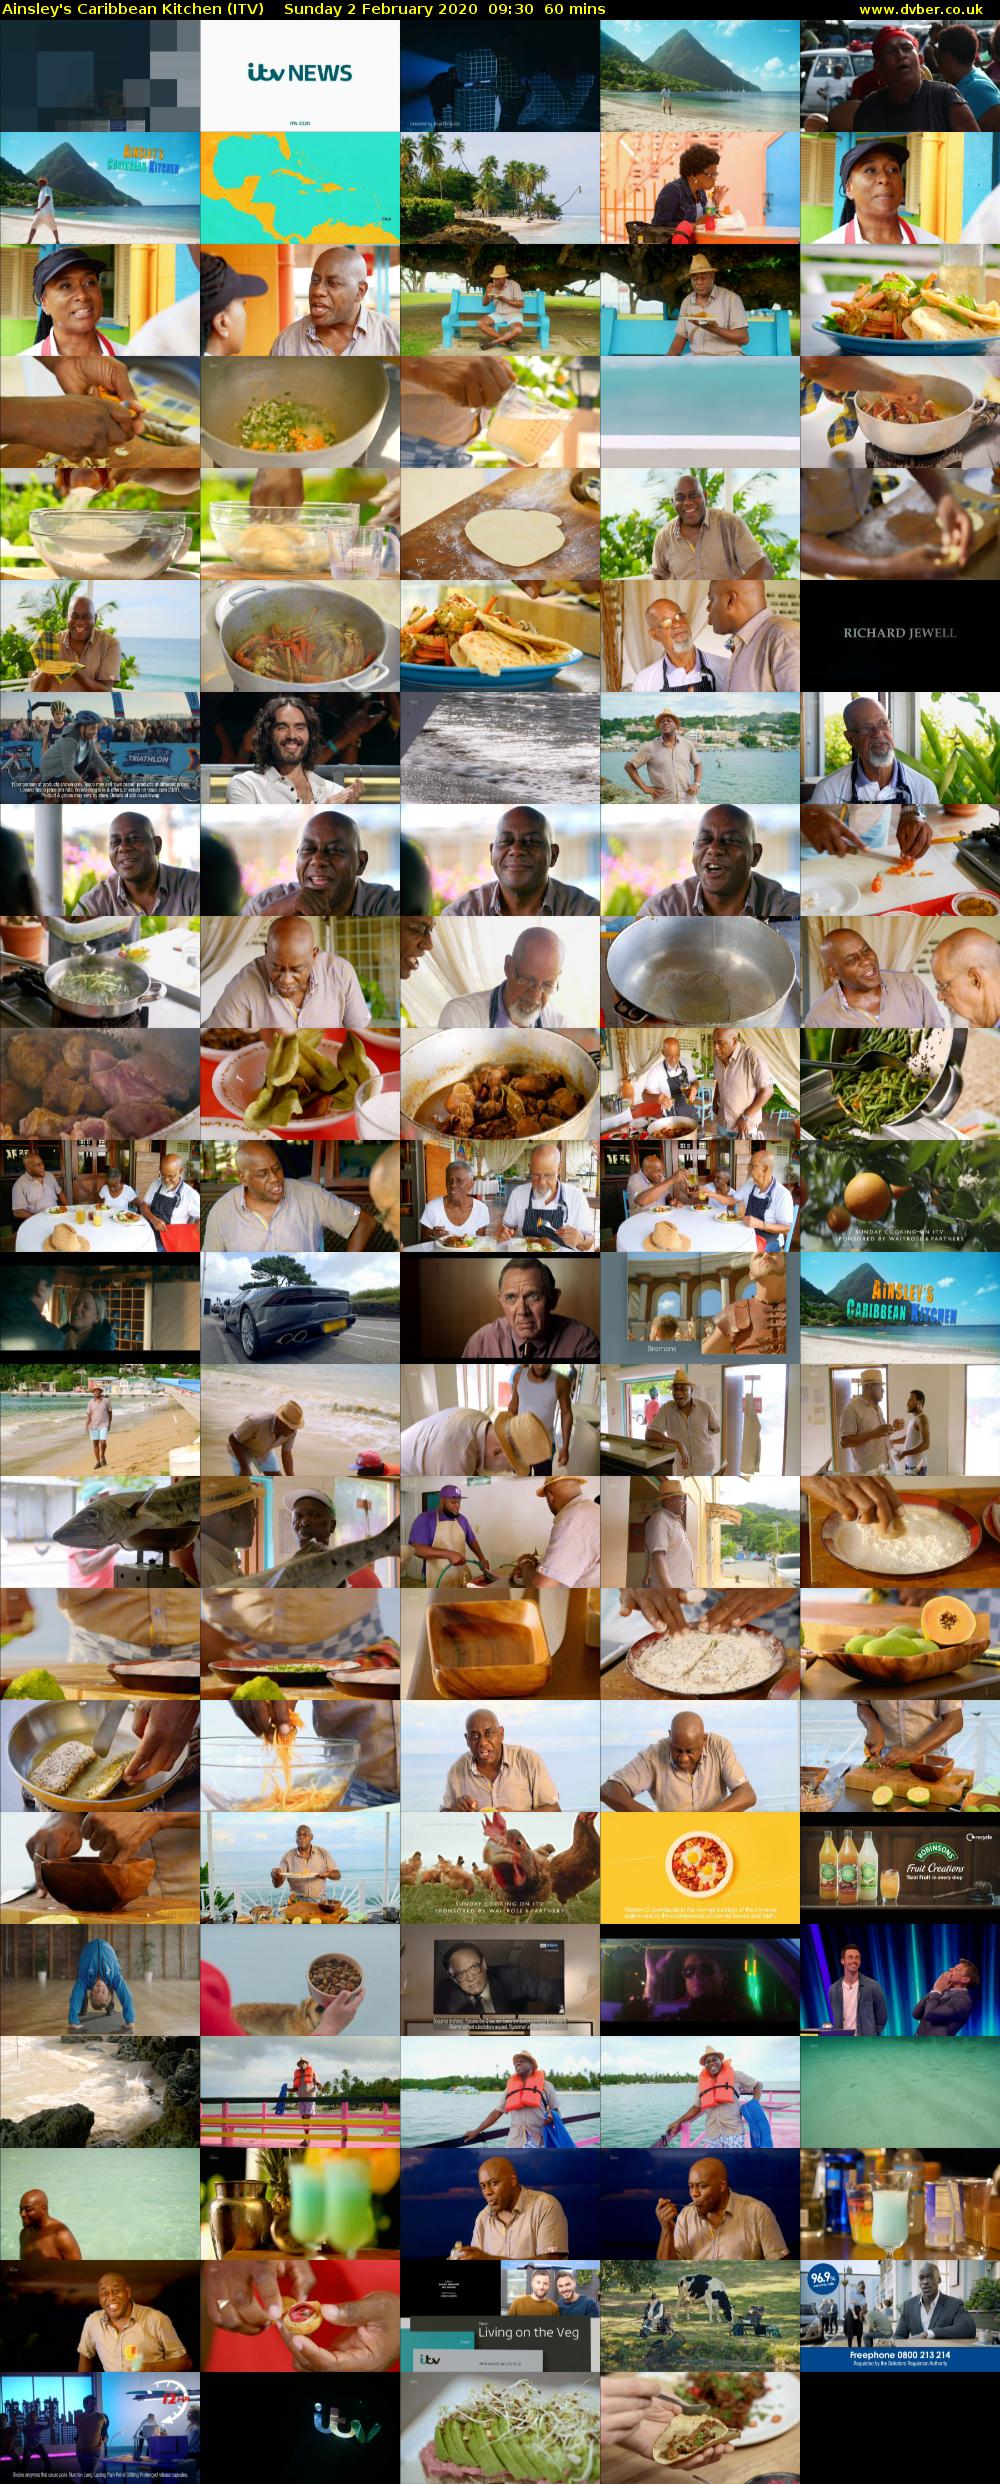 Ainsley's Caribbean Kitchen (ITV) Sunday 2 February 2020 09:30 - 10:30